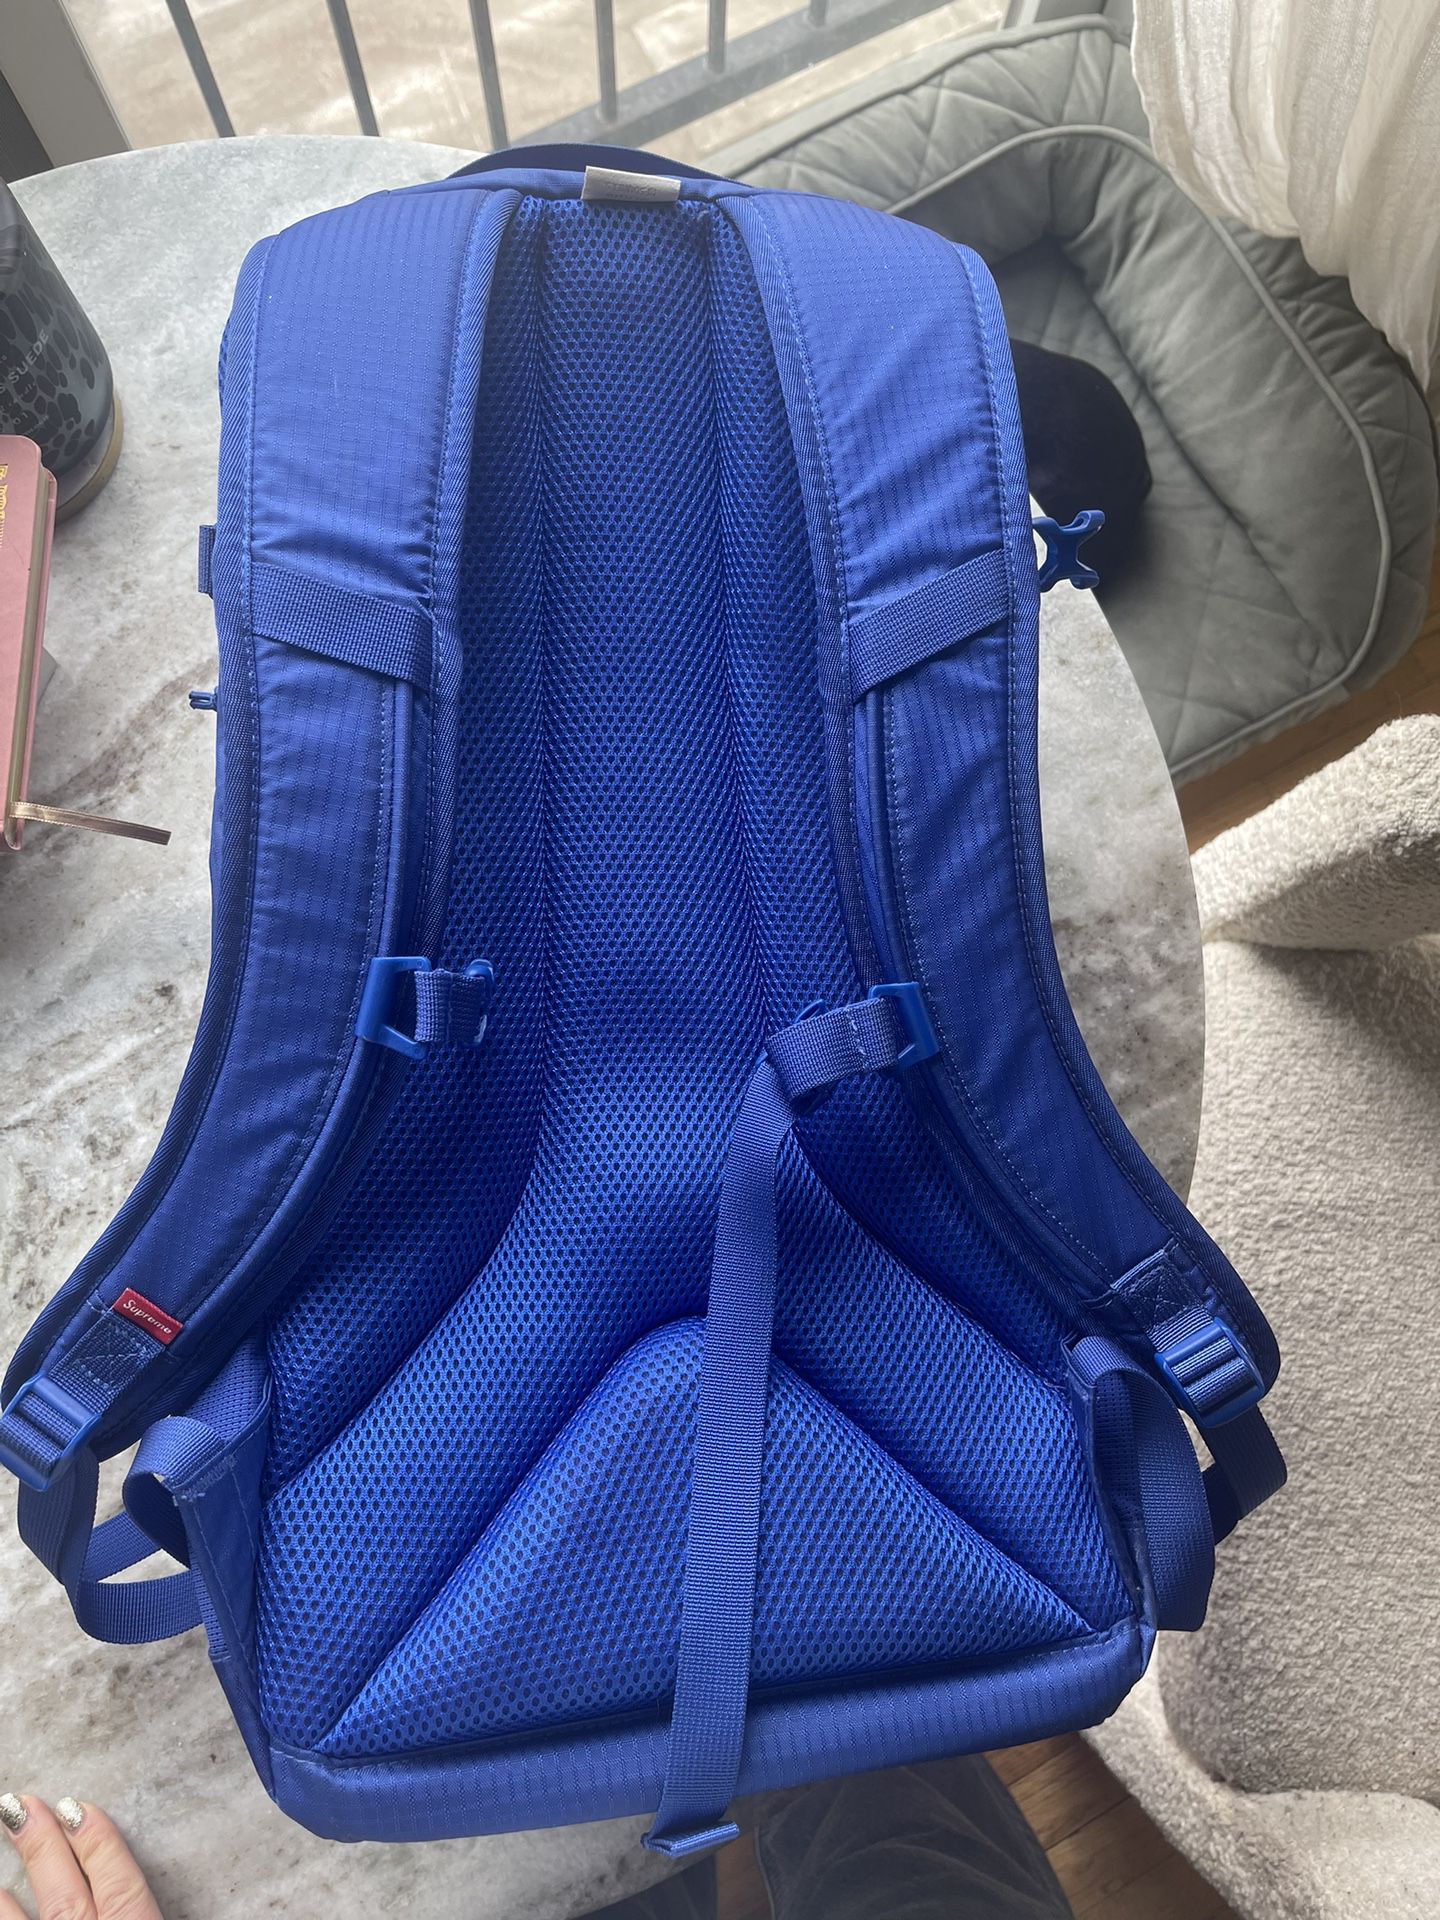 Supreme, Bags, Supreme Backpack Blue